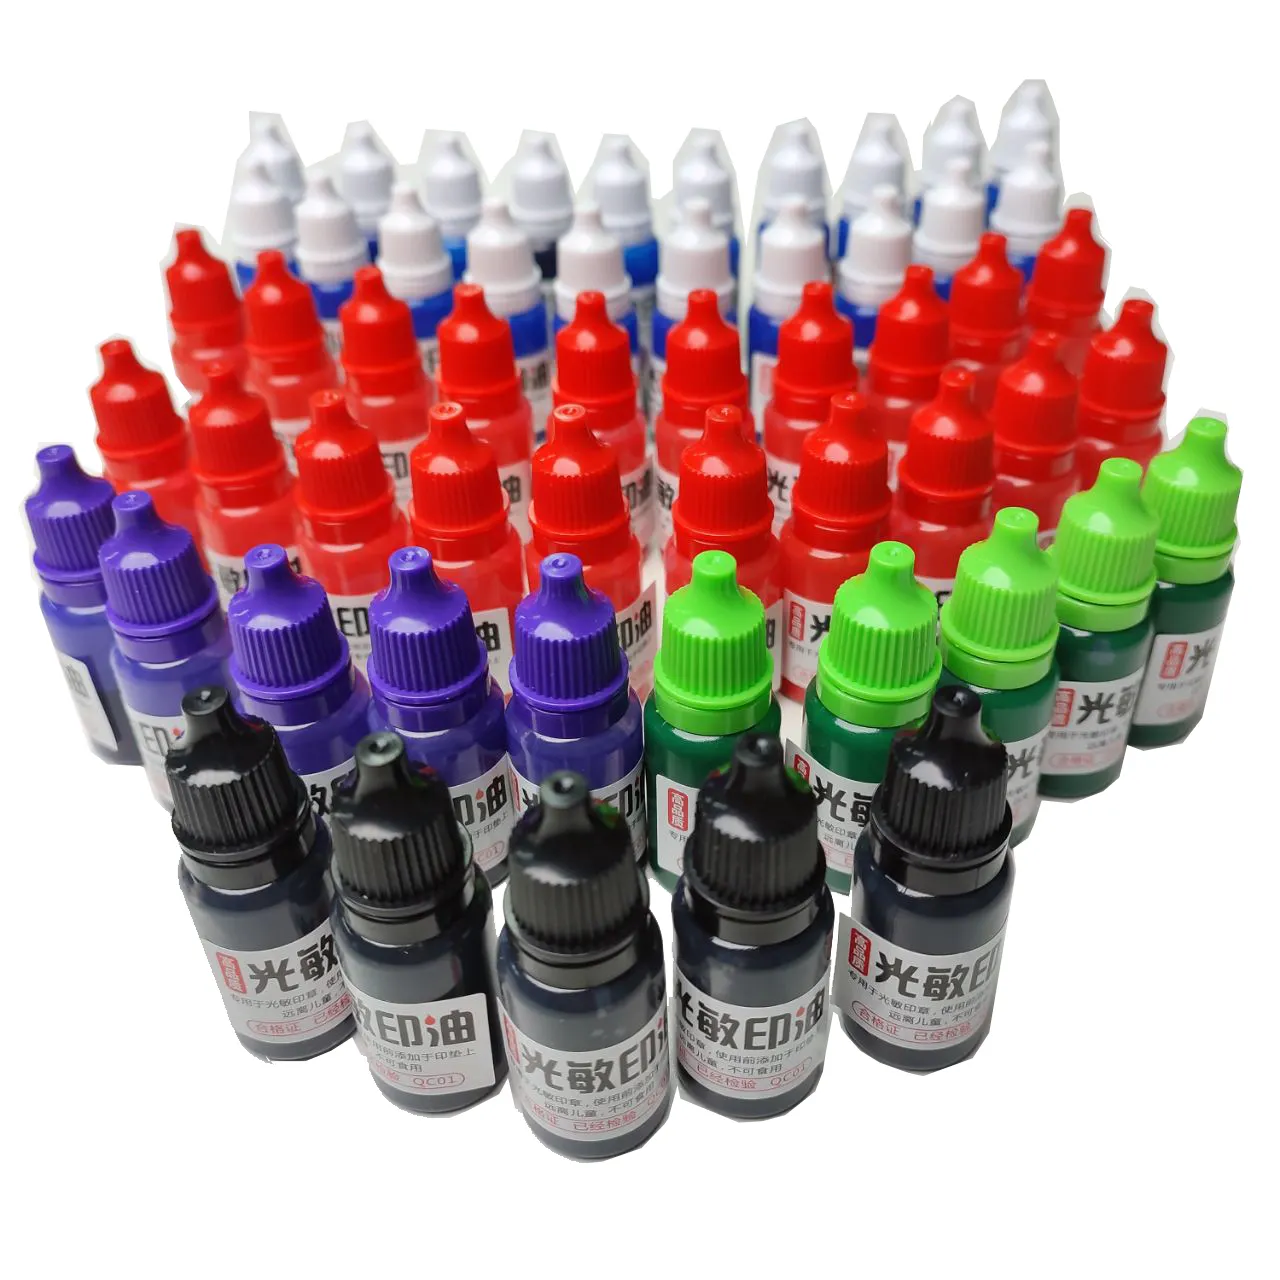 Etiquetas personalizables de secado rápido, sello de goma prearrancado, fotosensible, UV, secado rápido, impermeable, tinta Flash